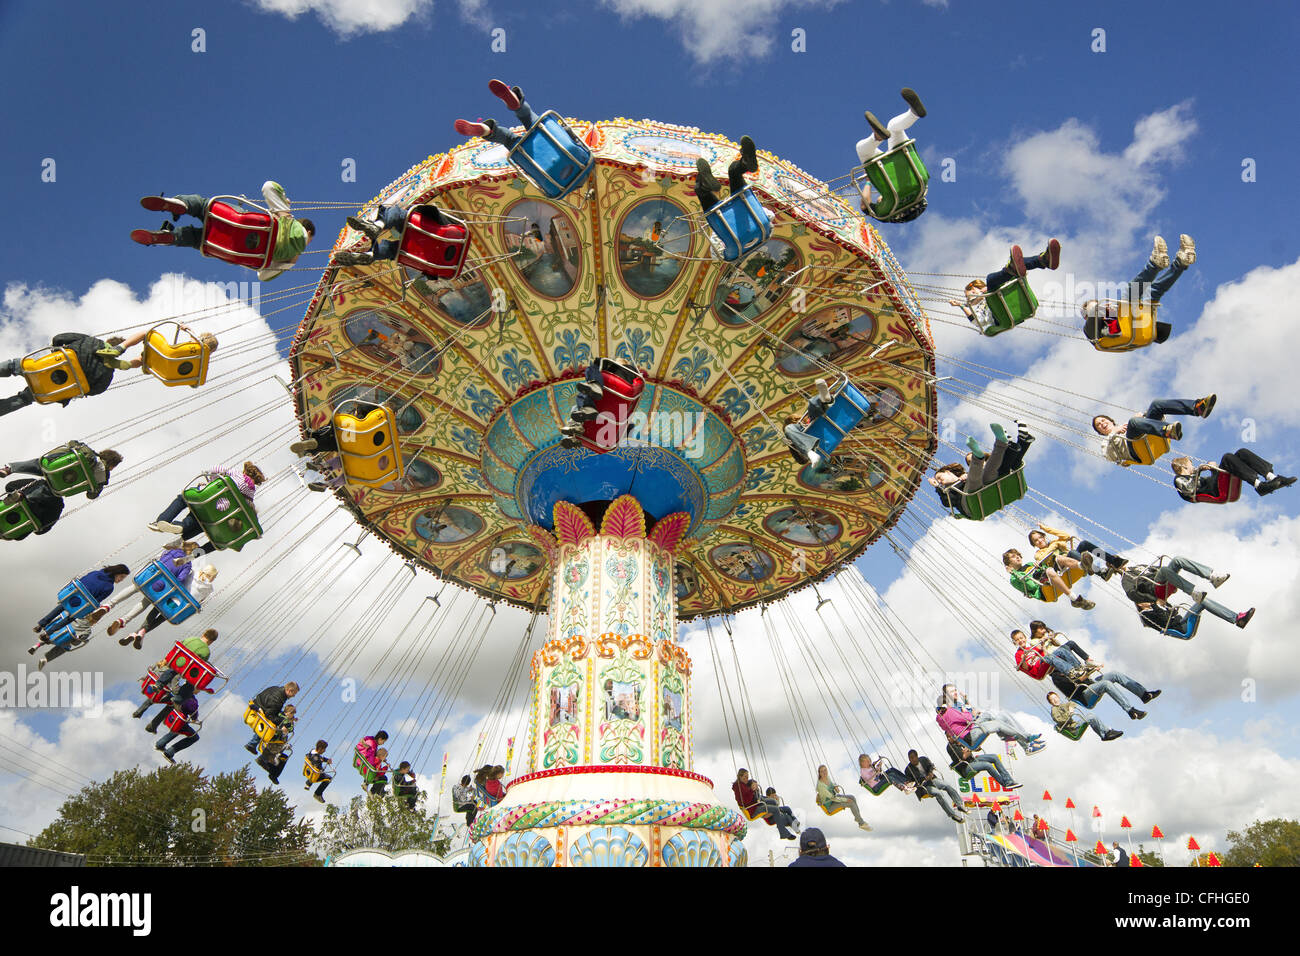 Families enjoying an amusement park ride at a carnival Stock Photo